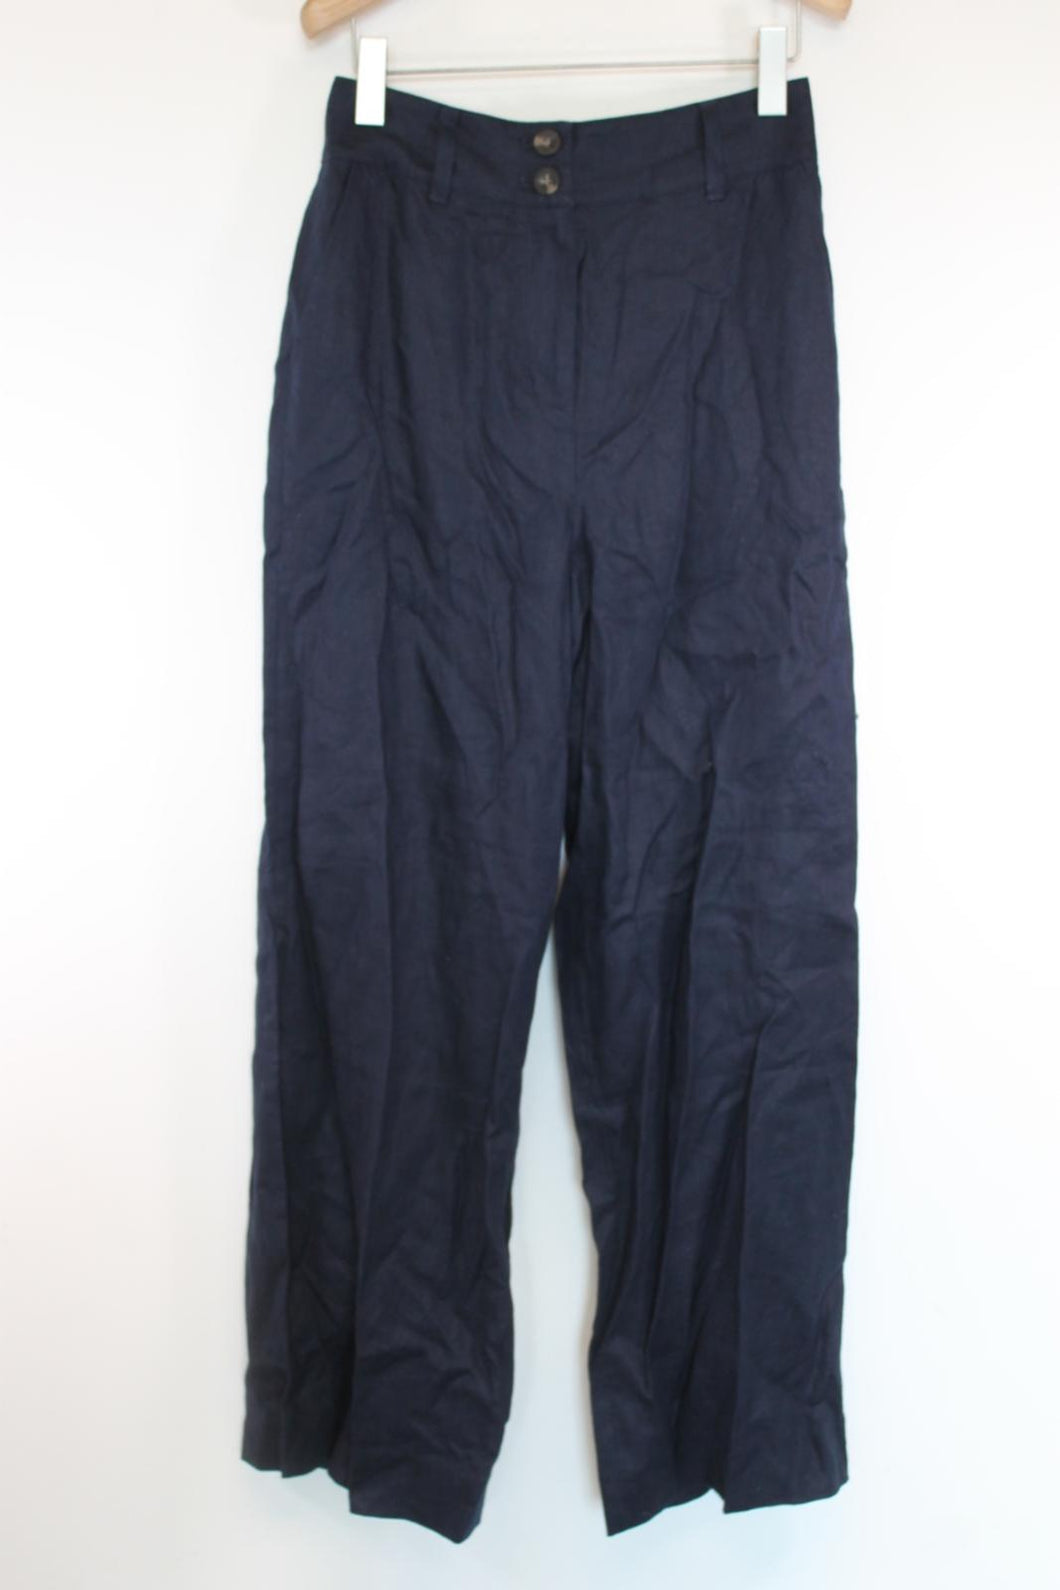 BODEN Ladies Navy Blue Linen Wide-Leg Trousers EU38 UK10R BNWT